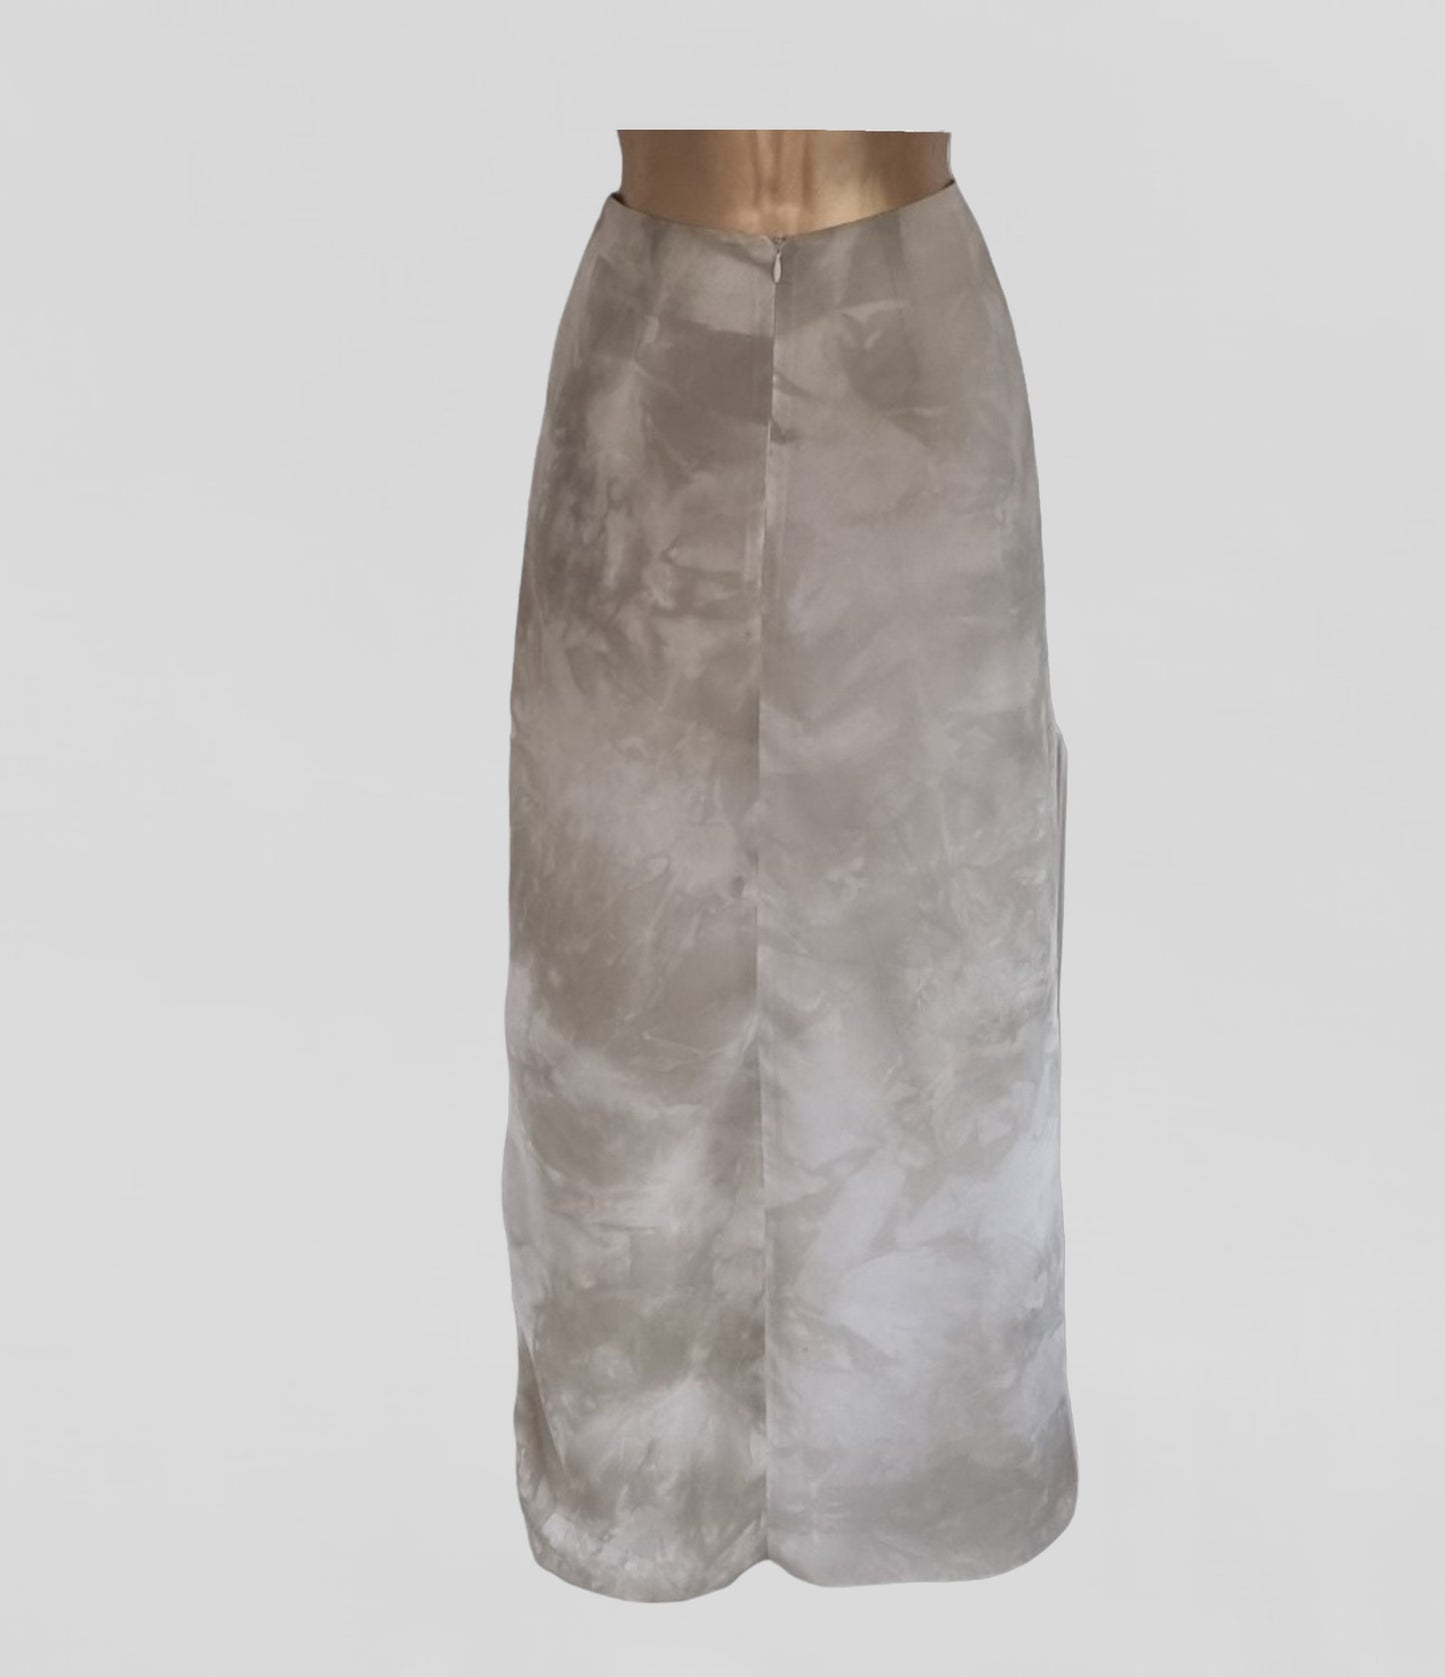 Beppe Bondi Womens Grey Italian Long Skirt UK 10 US 6 EU 38 IT 42 Timeless Fashions